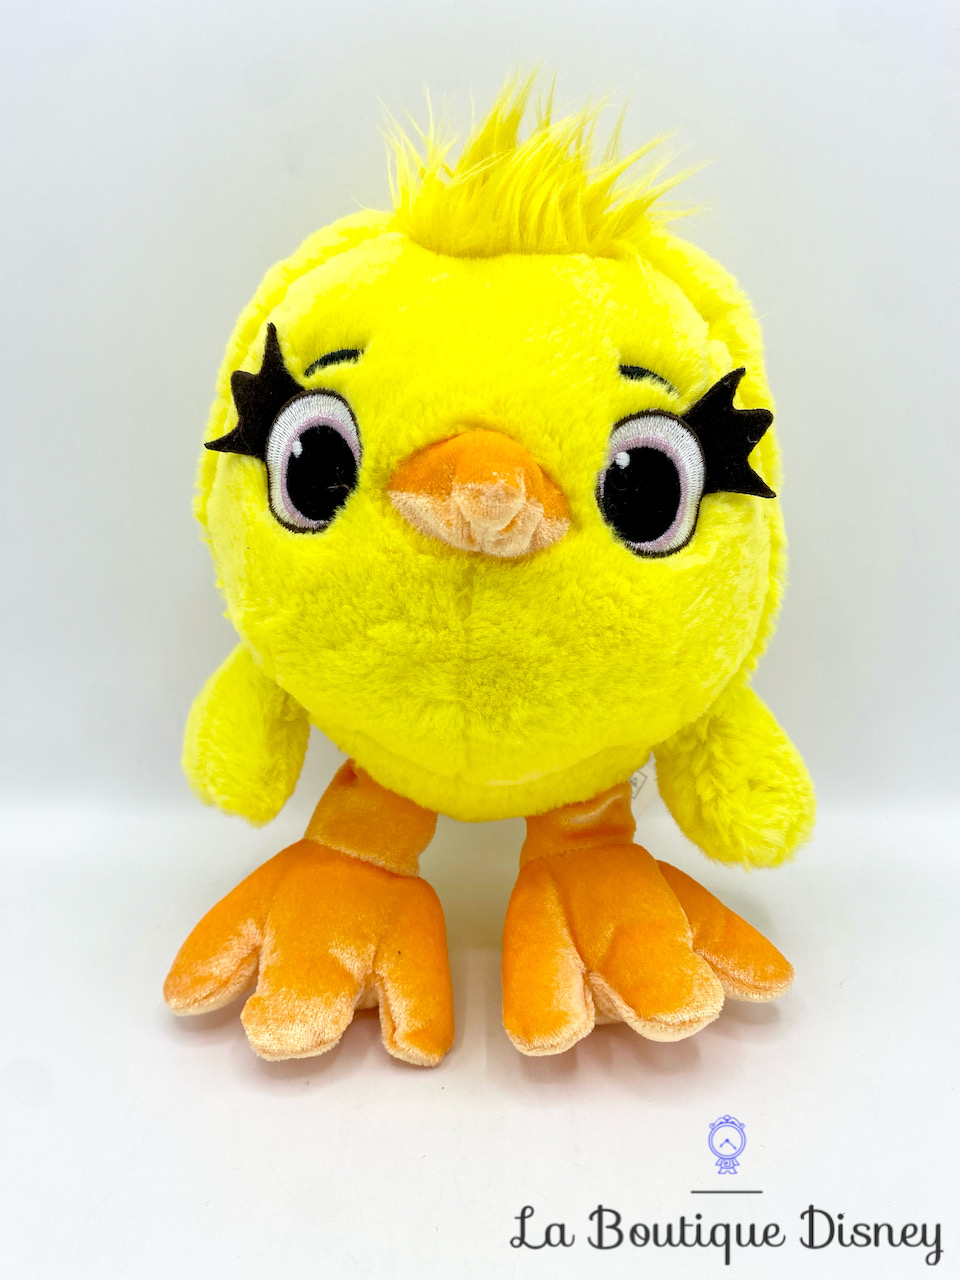 peluche-ducky-poussin-canard-jaune-toy-story-disney-nicotoy-2